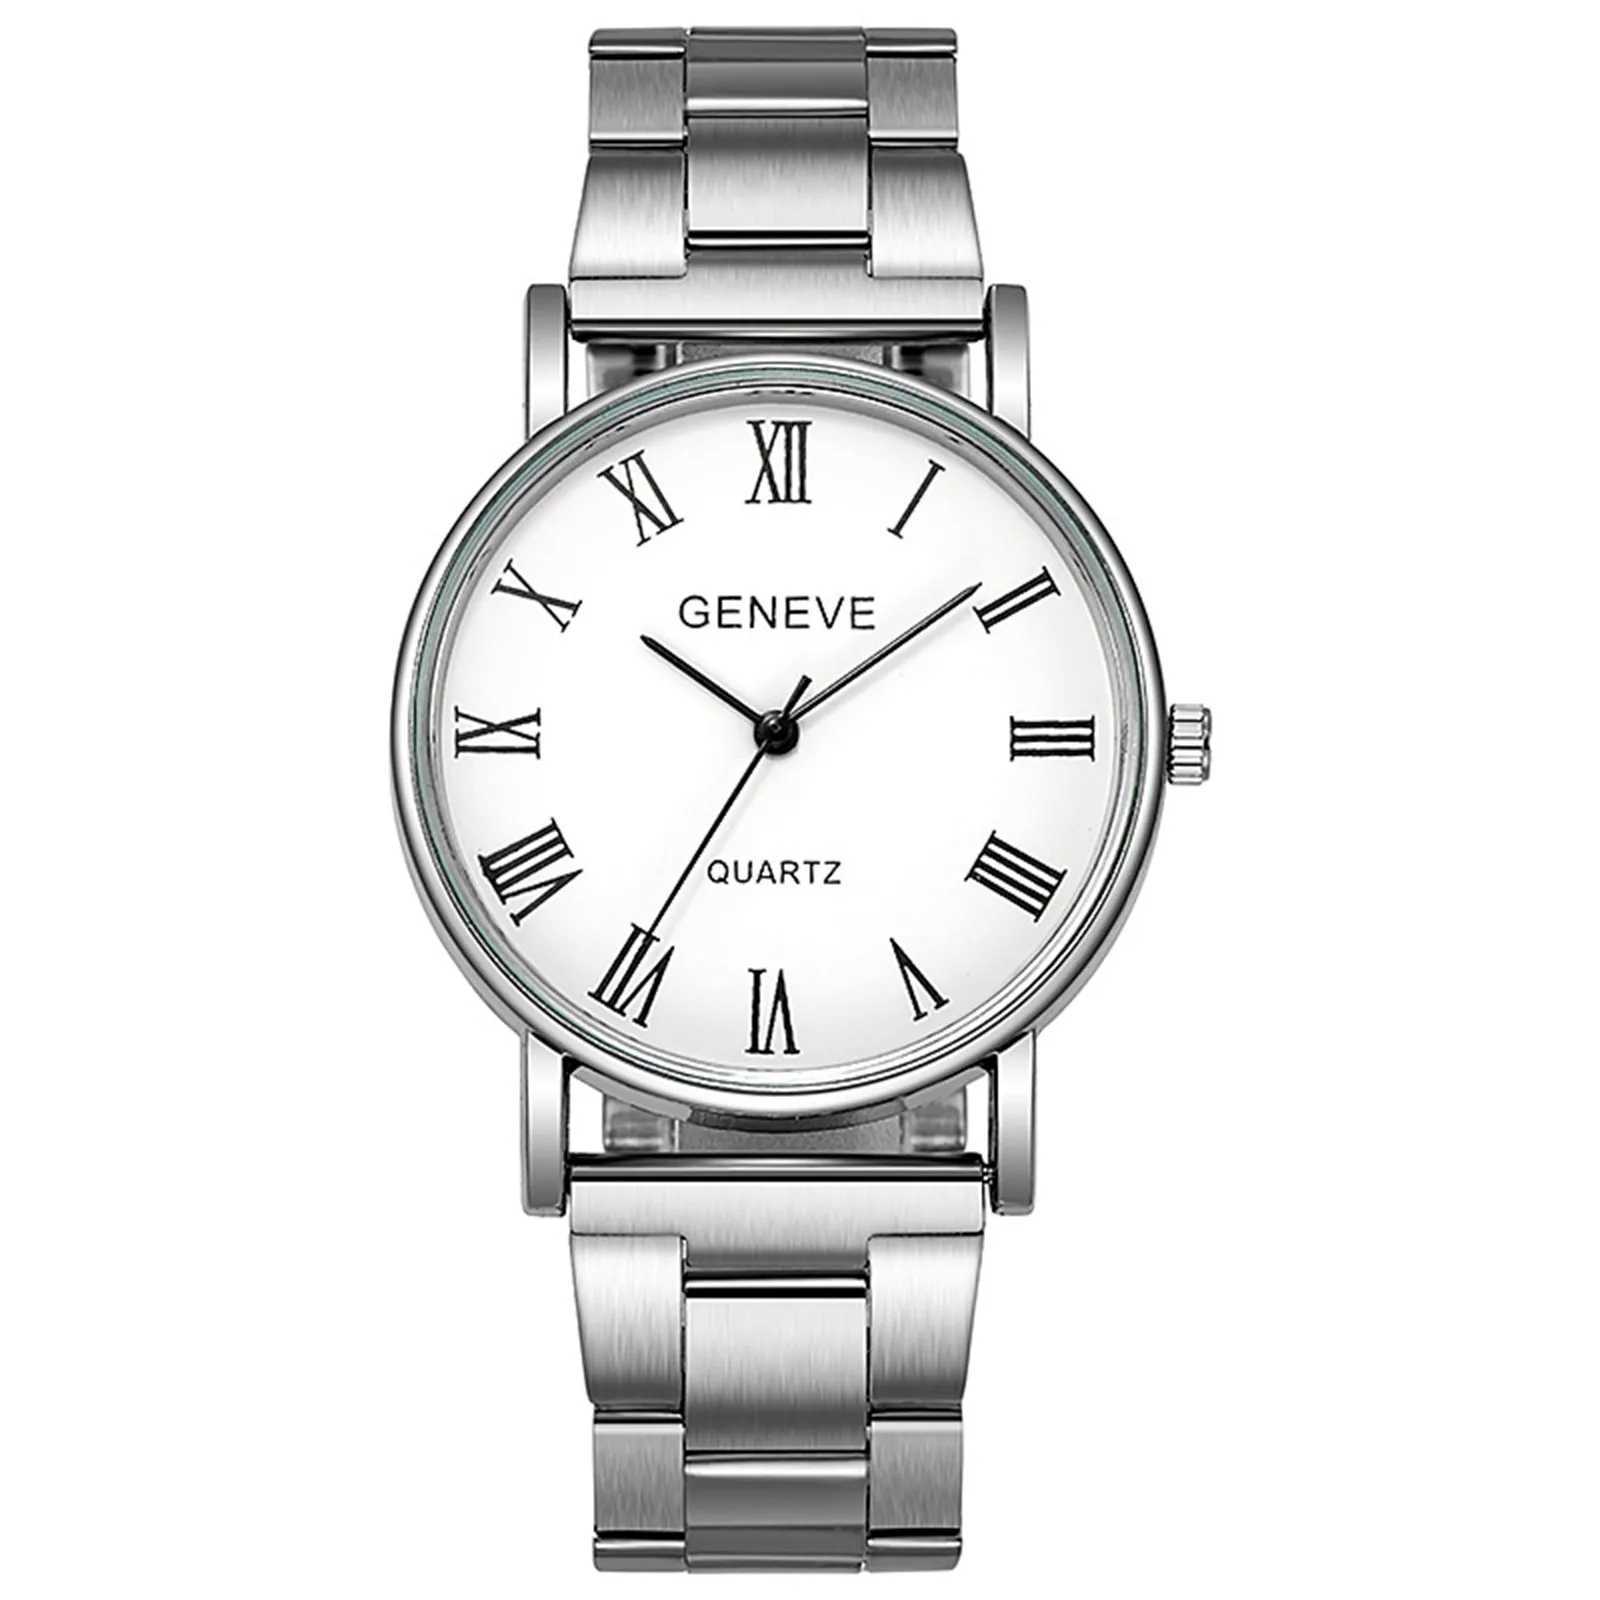 Other Watches Men'S Watch Fashion Casual Watch Quartz Watch Steel Band Watch Wrist Watch RelGio Masculino Reloj HombreL231214